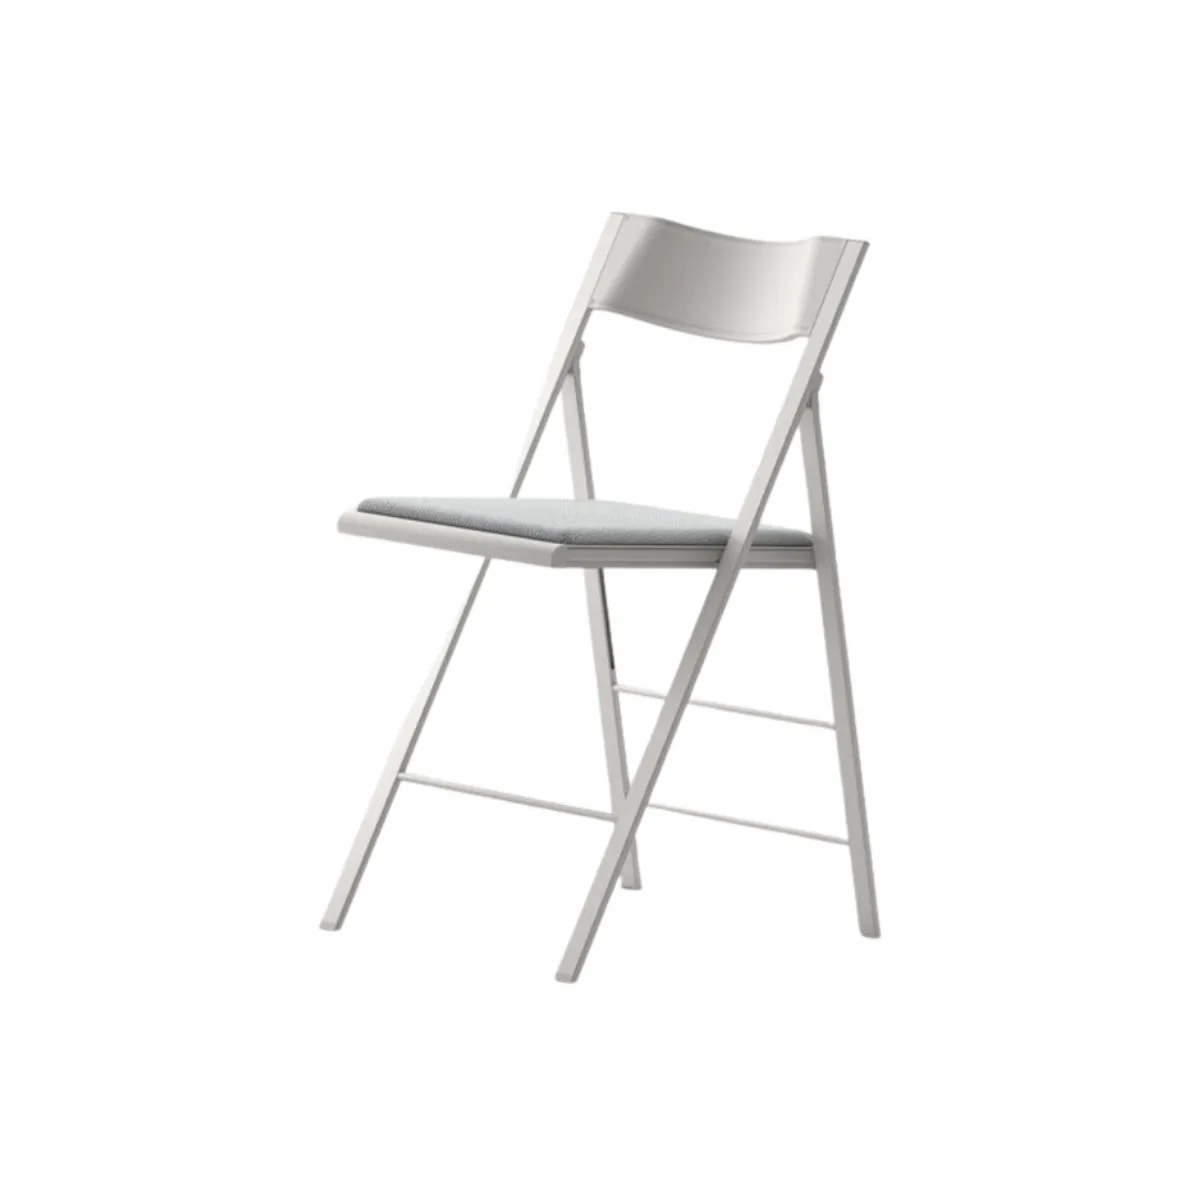 Koa soft folding chair 2